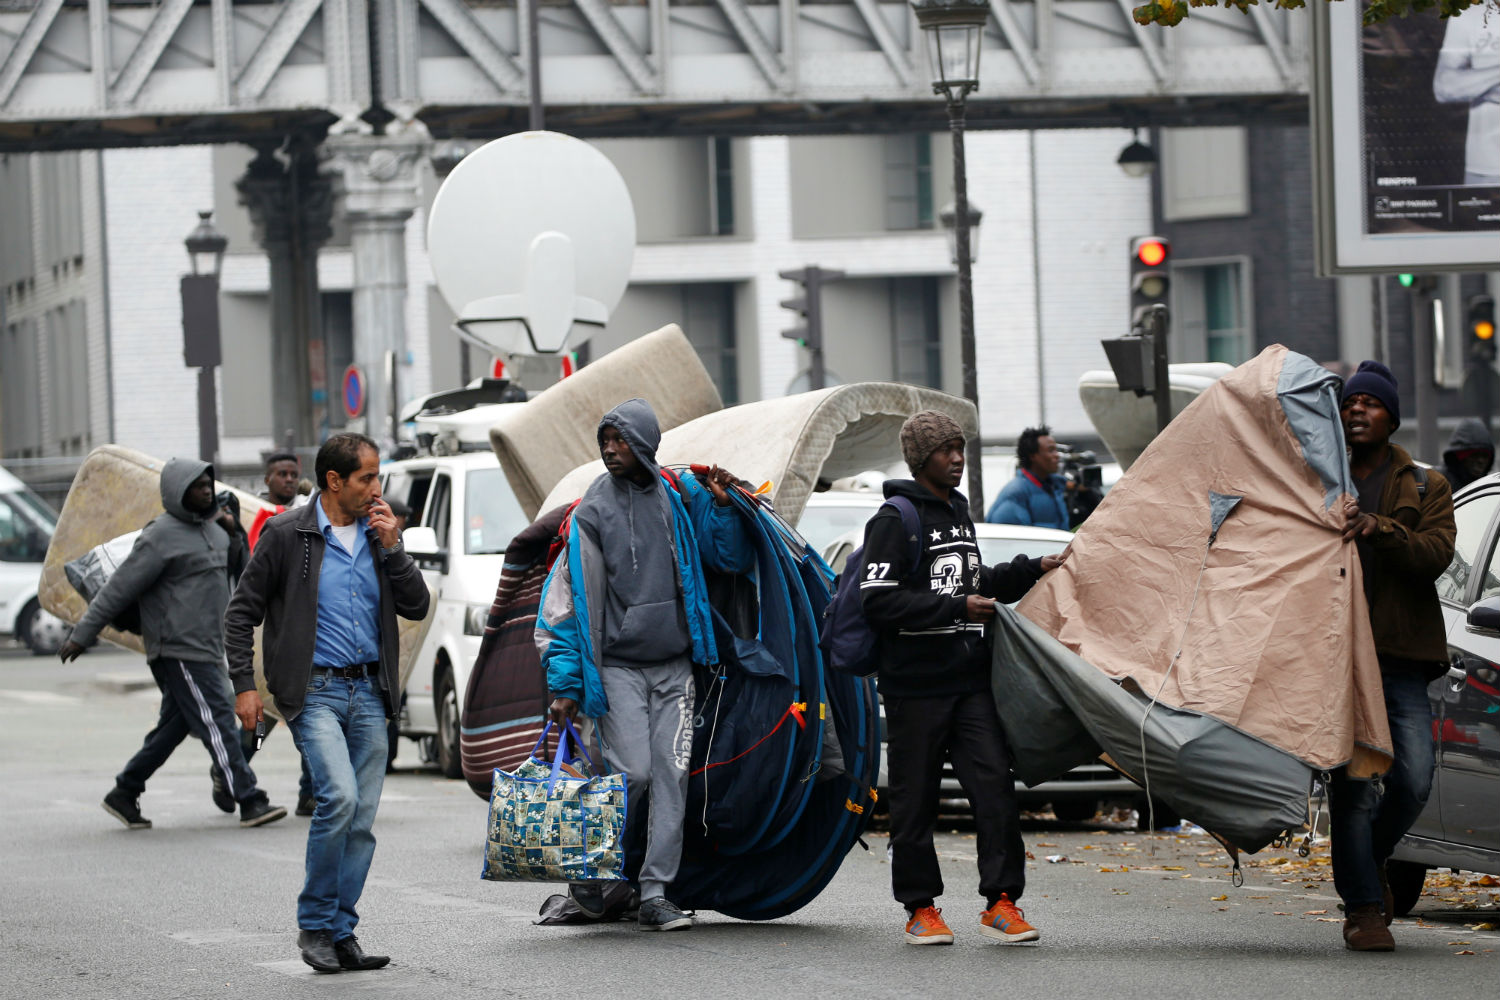 Cientos de refugiados regresan a ‘campos secretos’ cerca de Calais en un intento de alcanzar Reino Unido